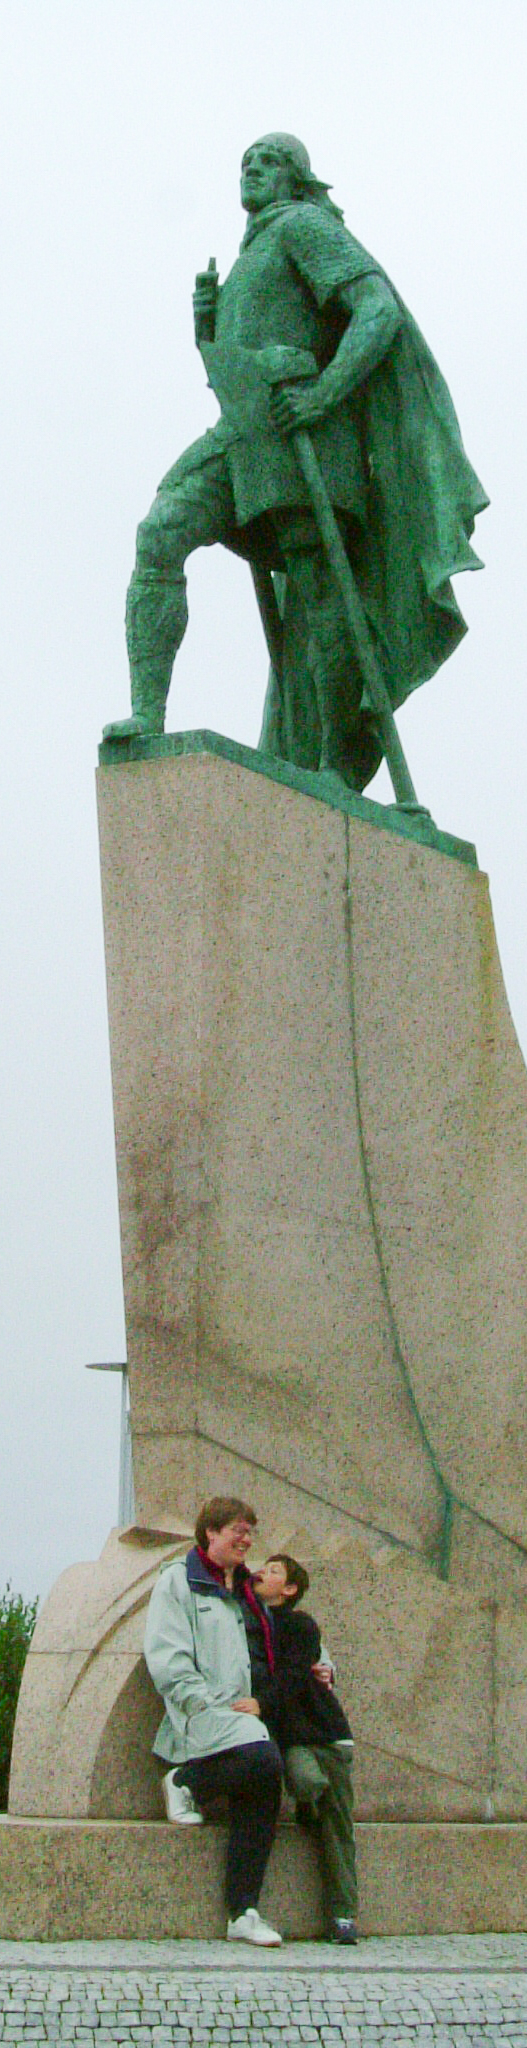 Statue of Leifur Eiríksson 0079 2